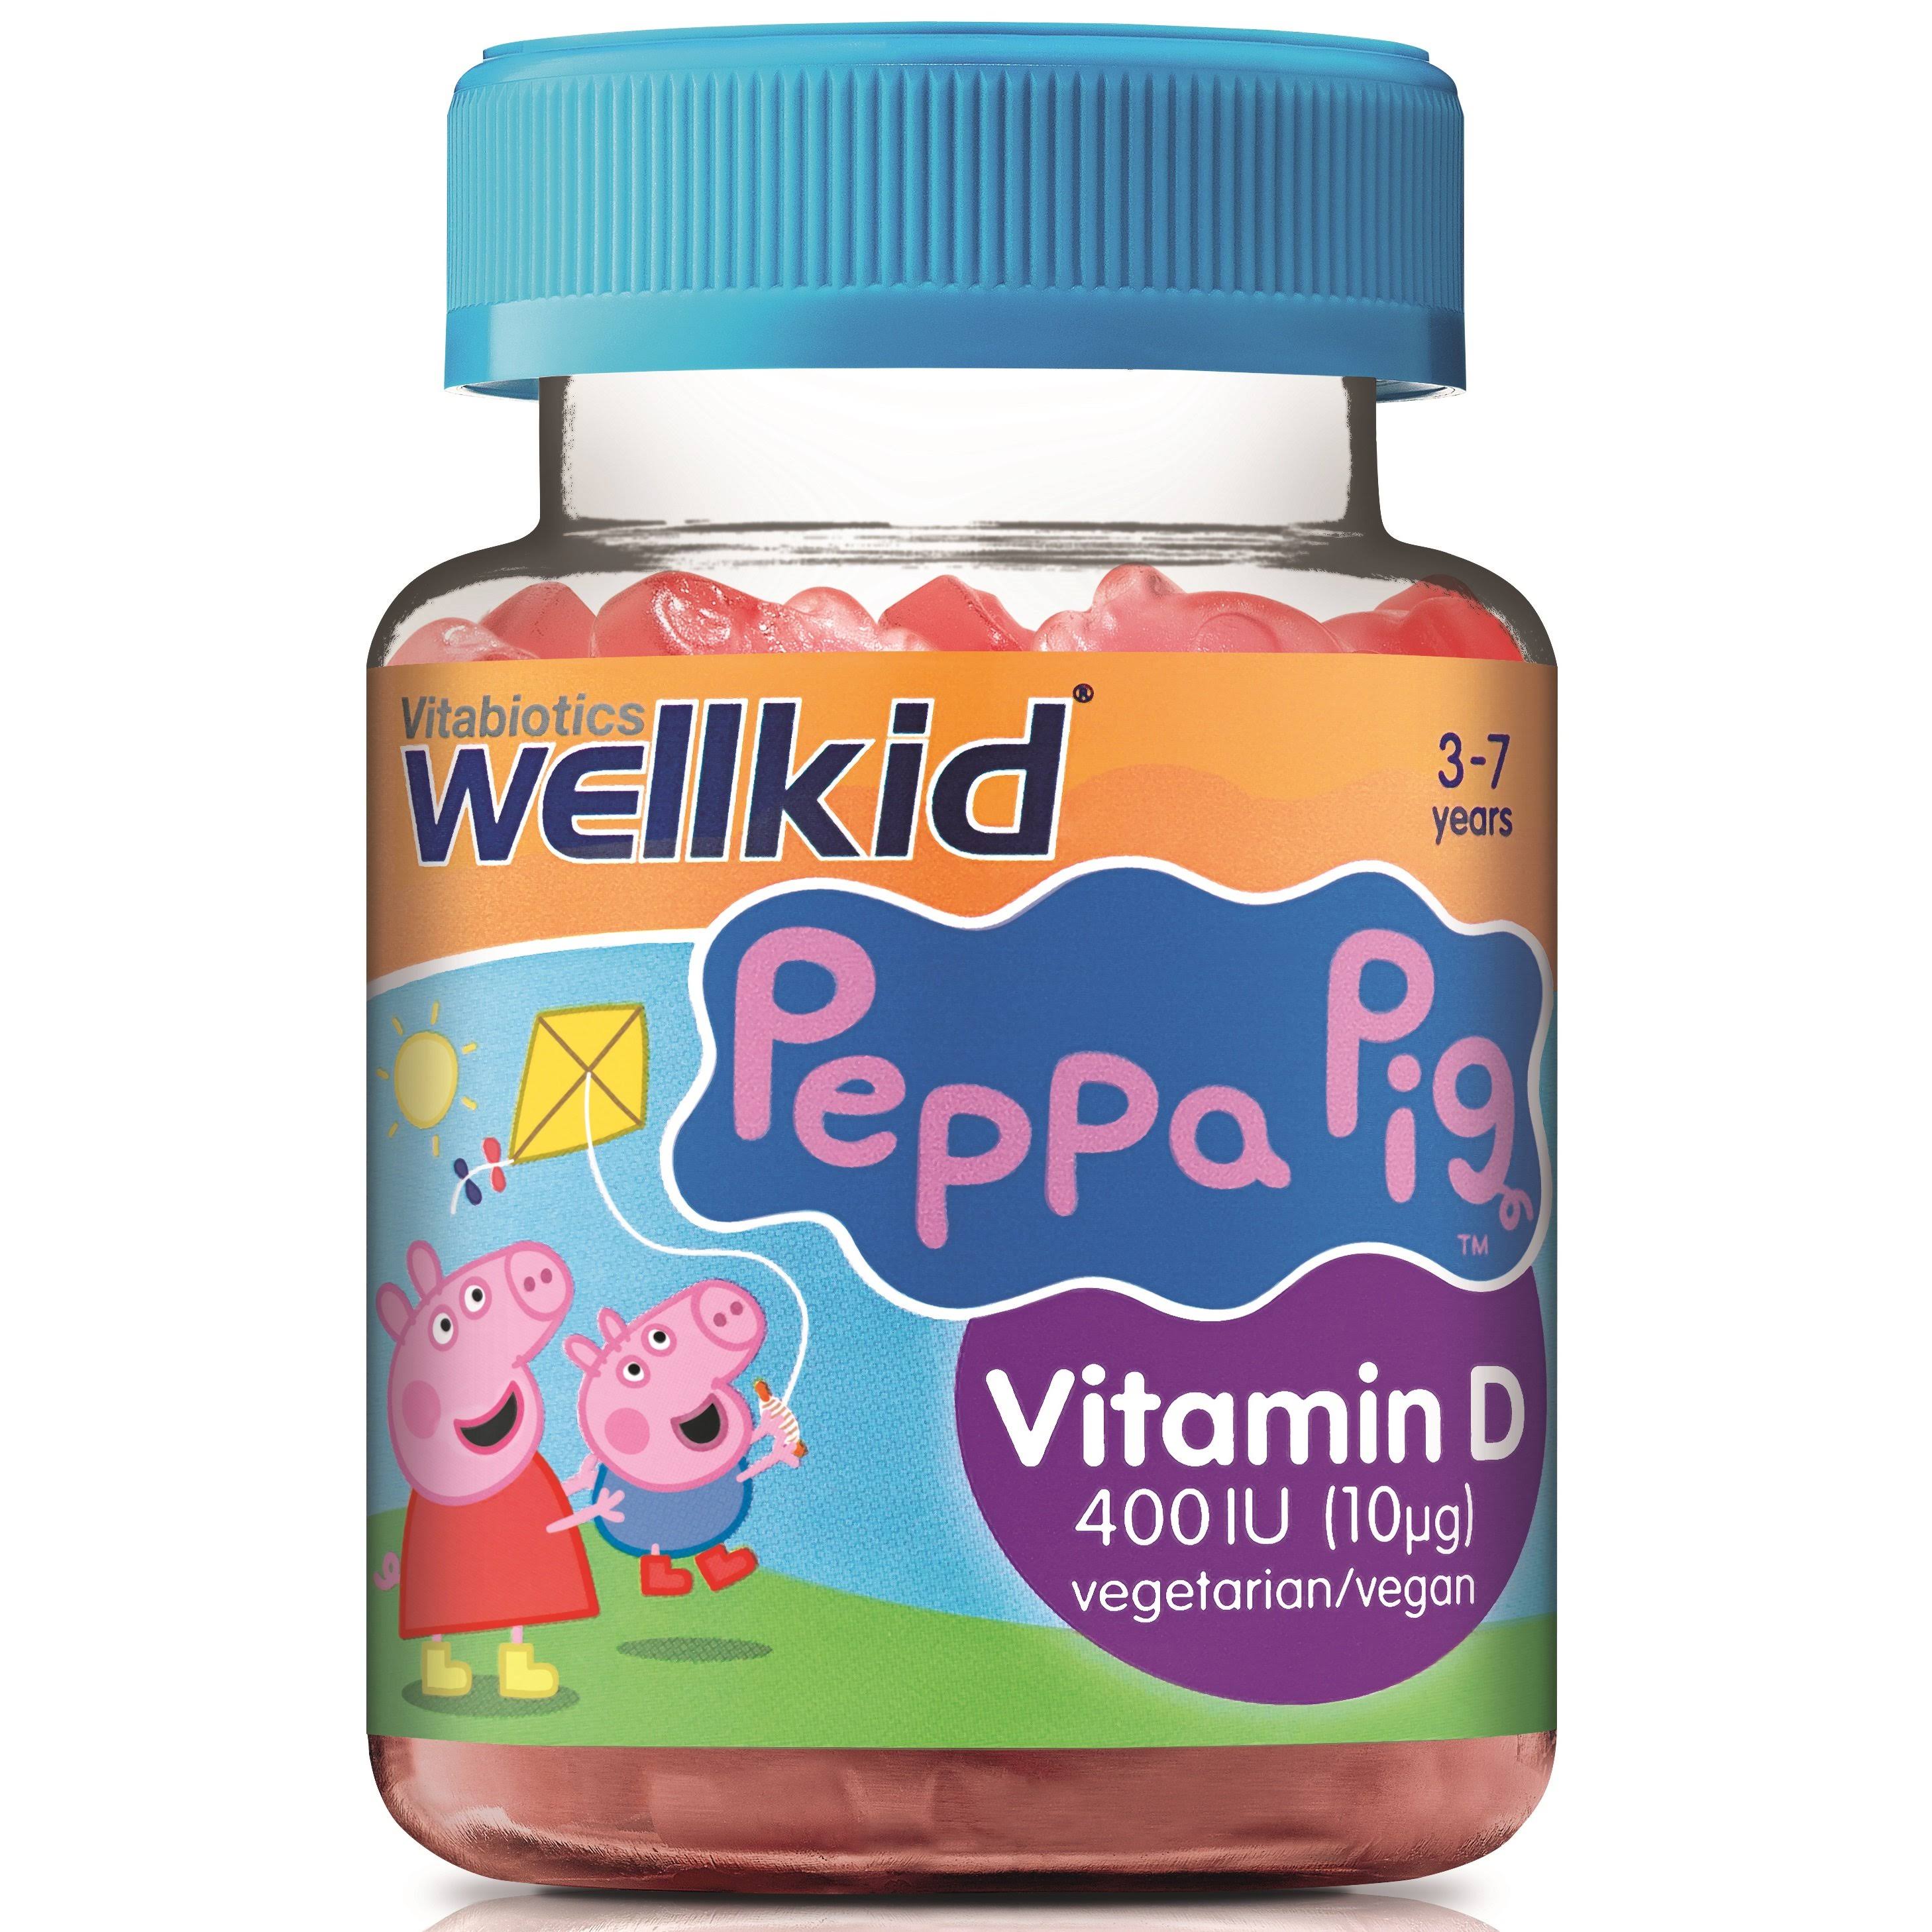 Vitabiotics Well Kid Peppa Pig Vitamin D 400 IU Supplement - 30pcs, 3 to 7 years